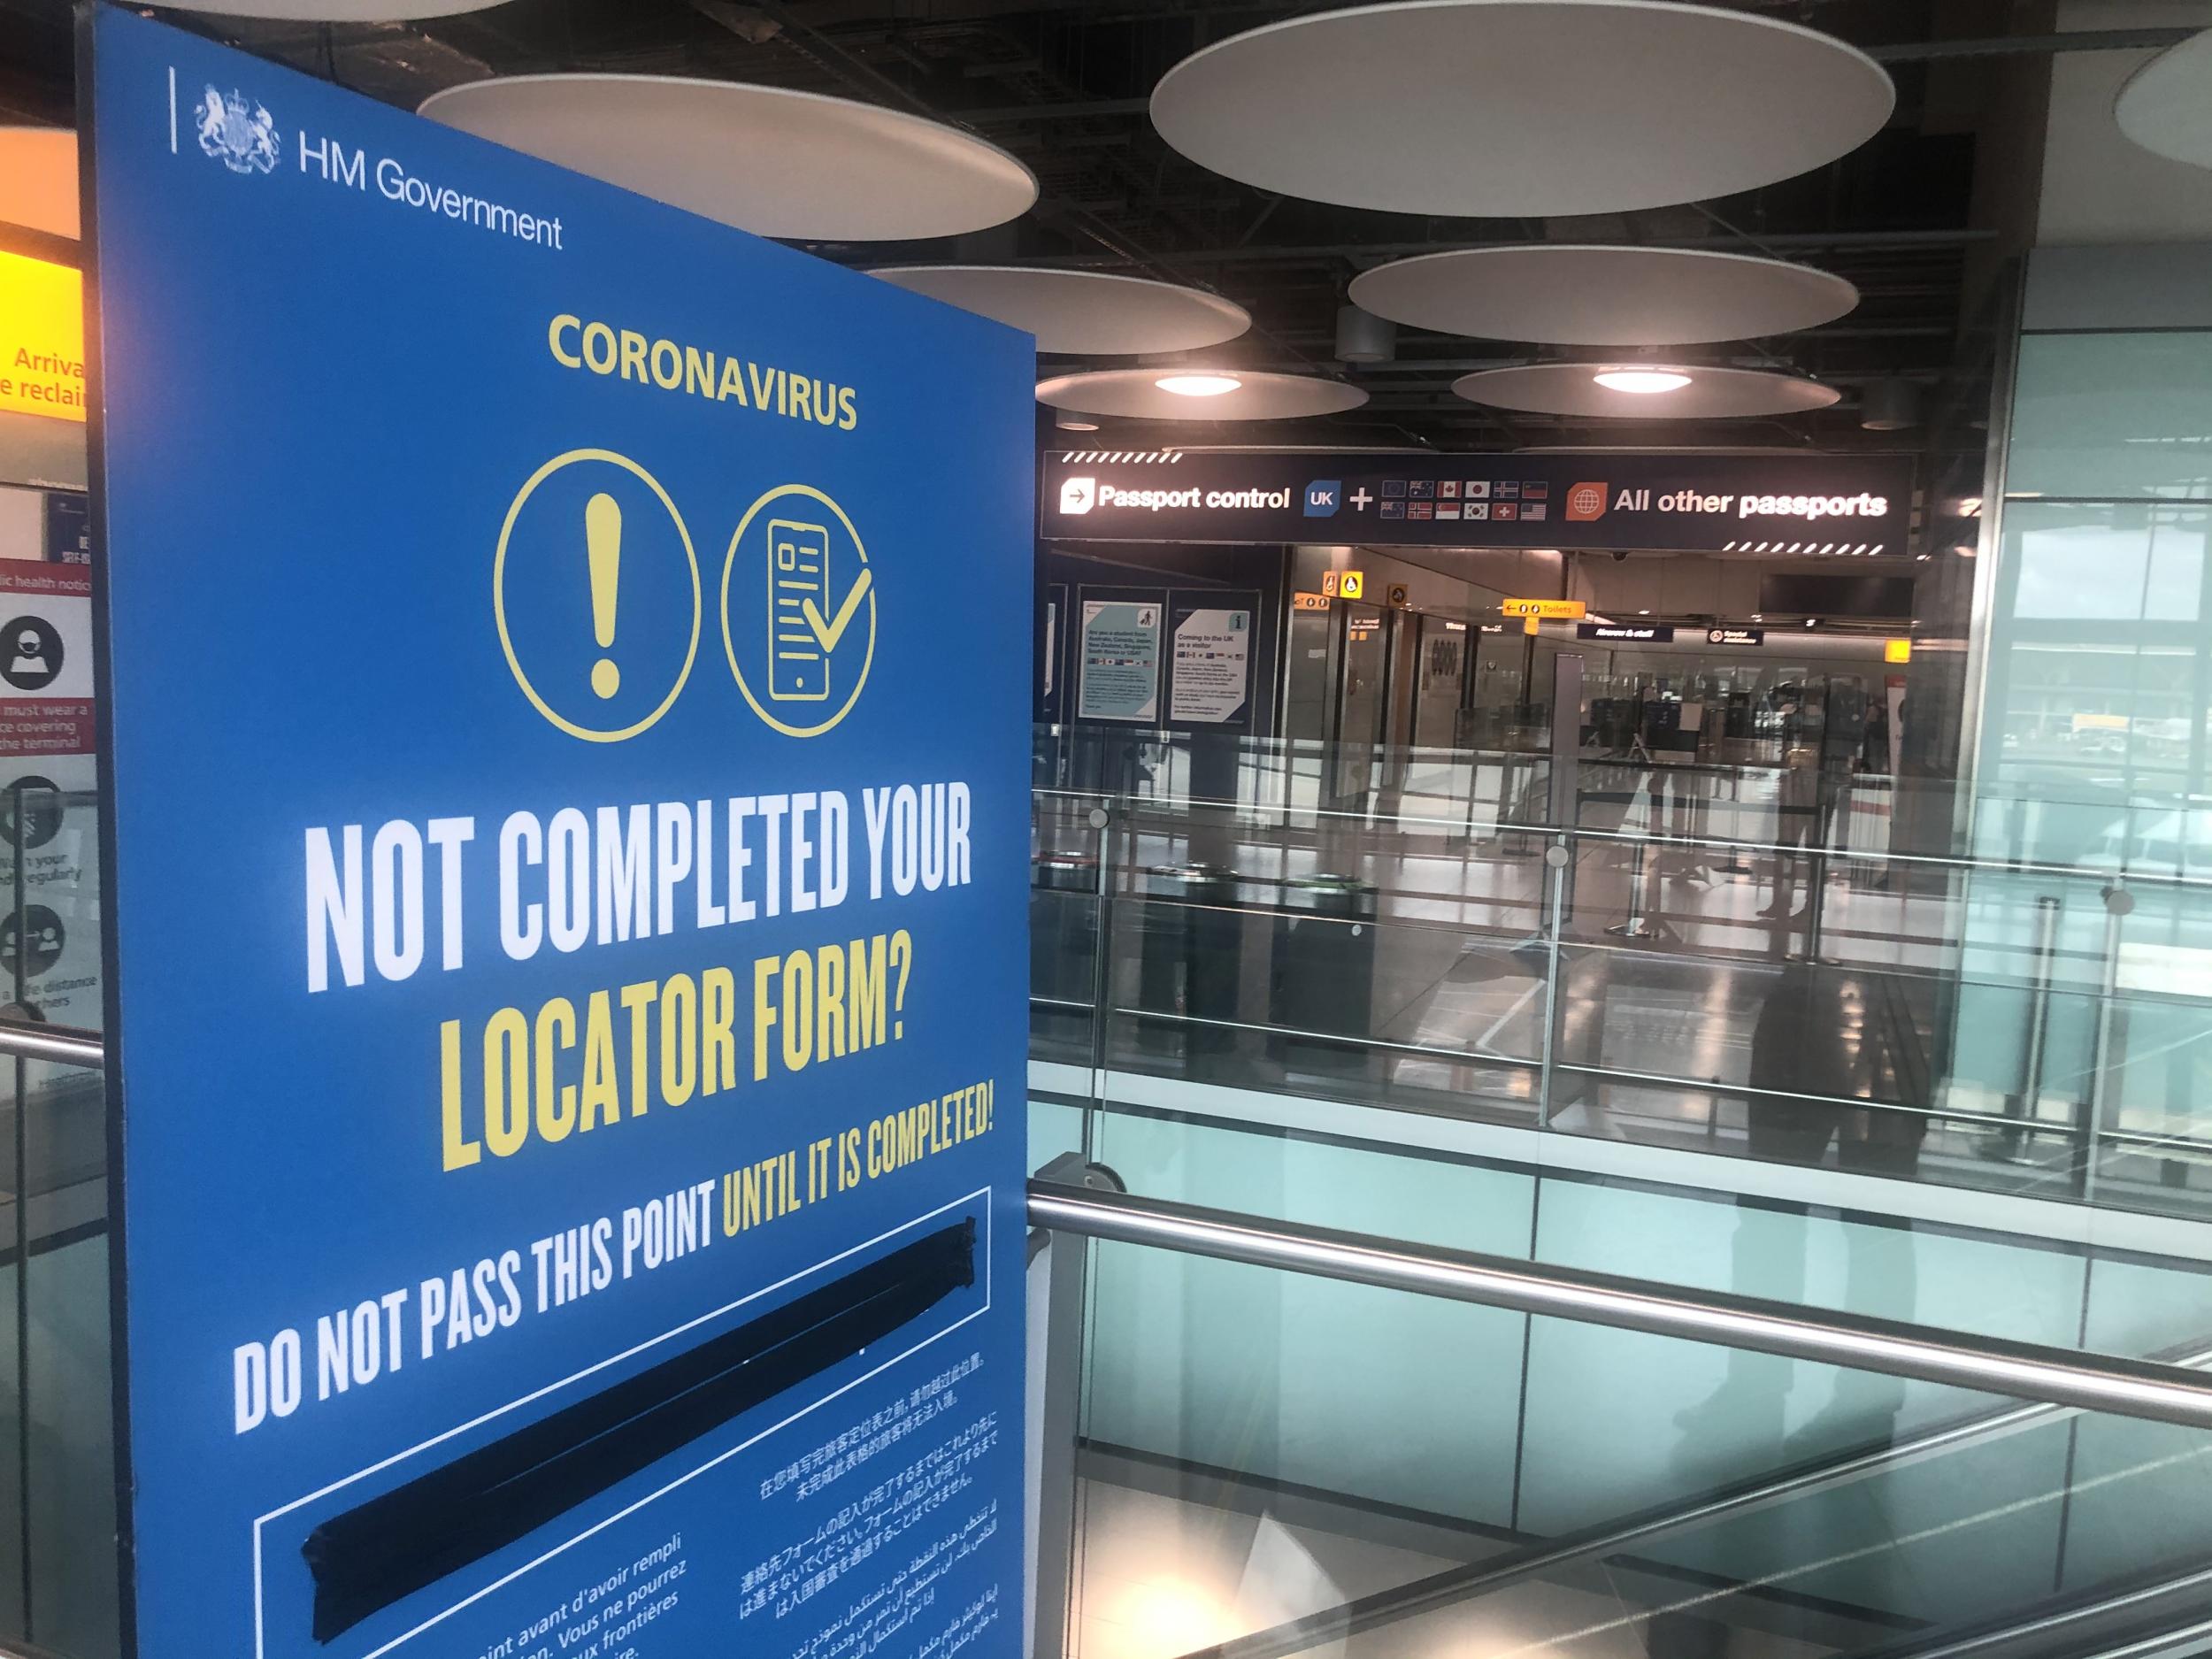 Quarantine alert: the arrivals area at Heathrow Terminal 5